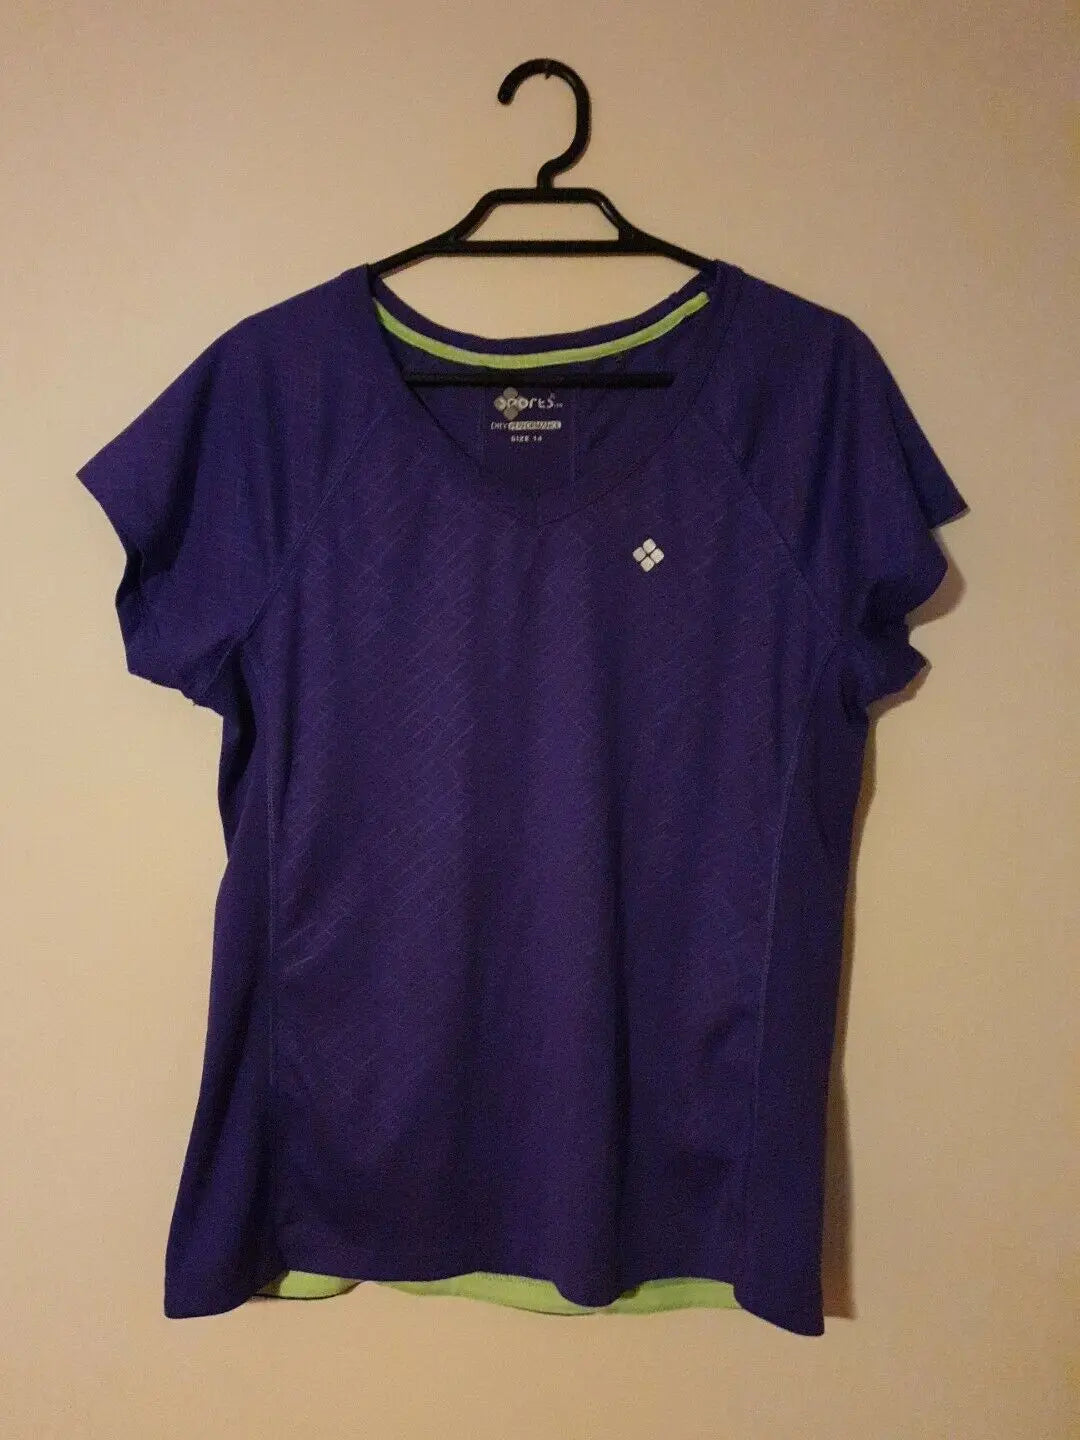 Womens sports tshirt size 14 purple dry performance top stretchy gym 226 - Image #1